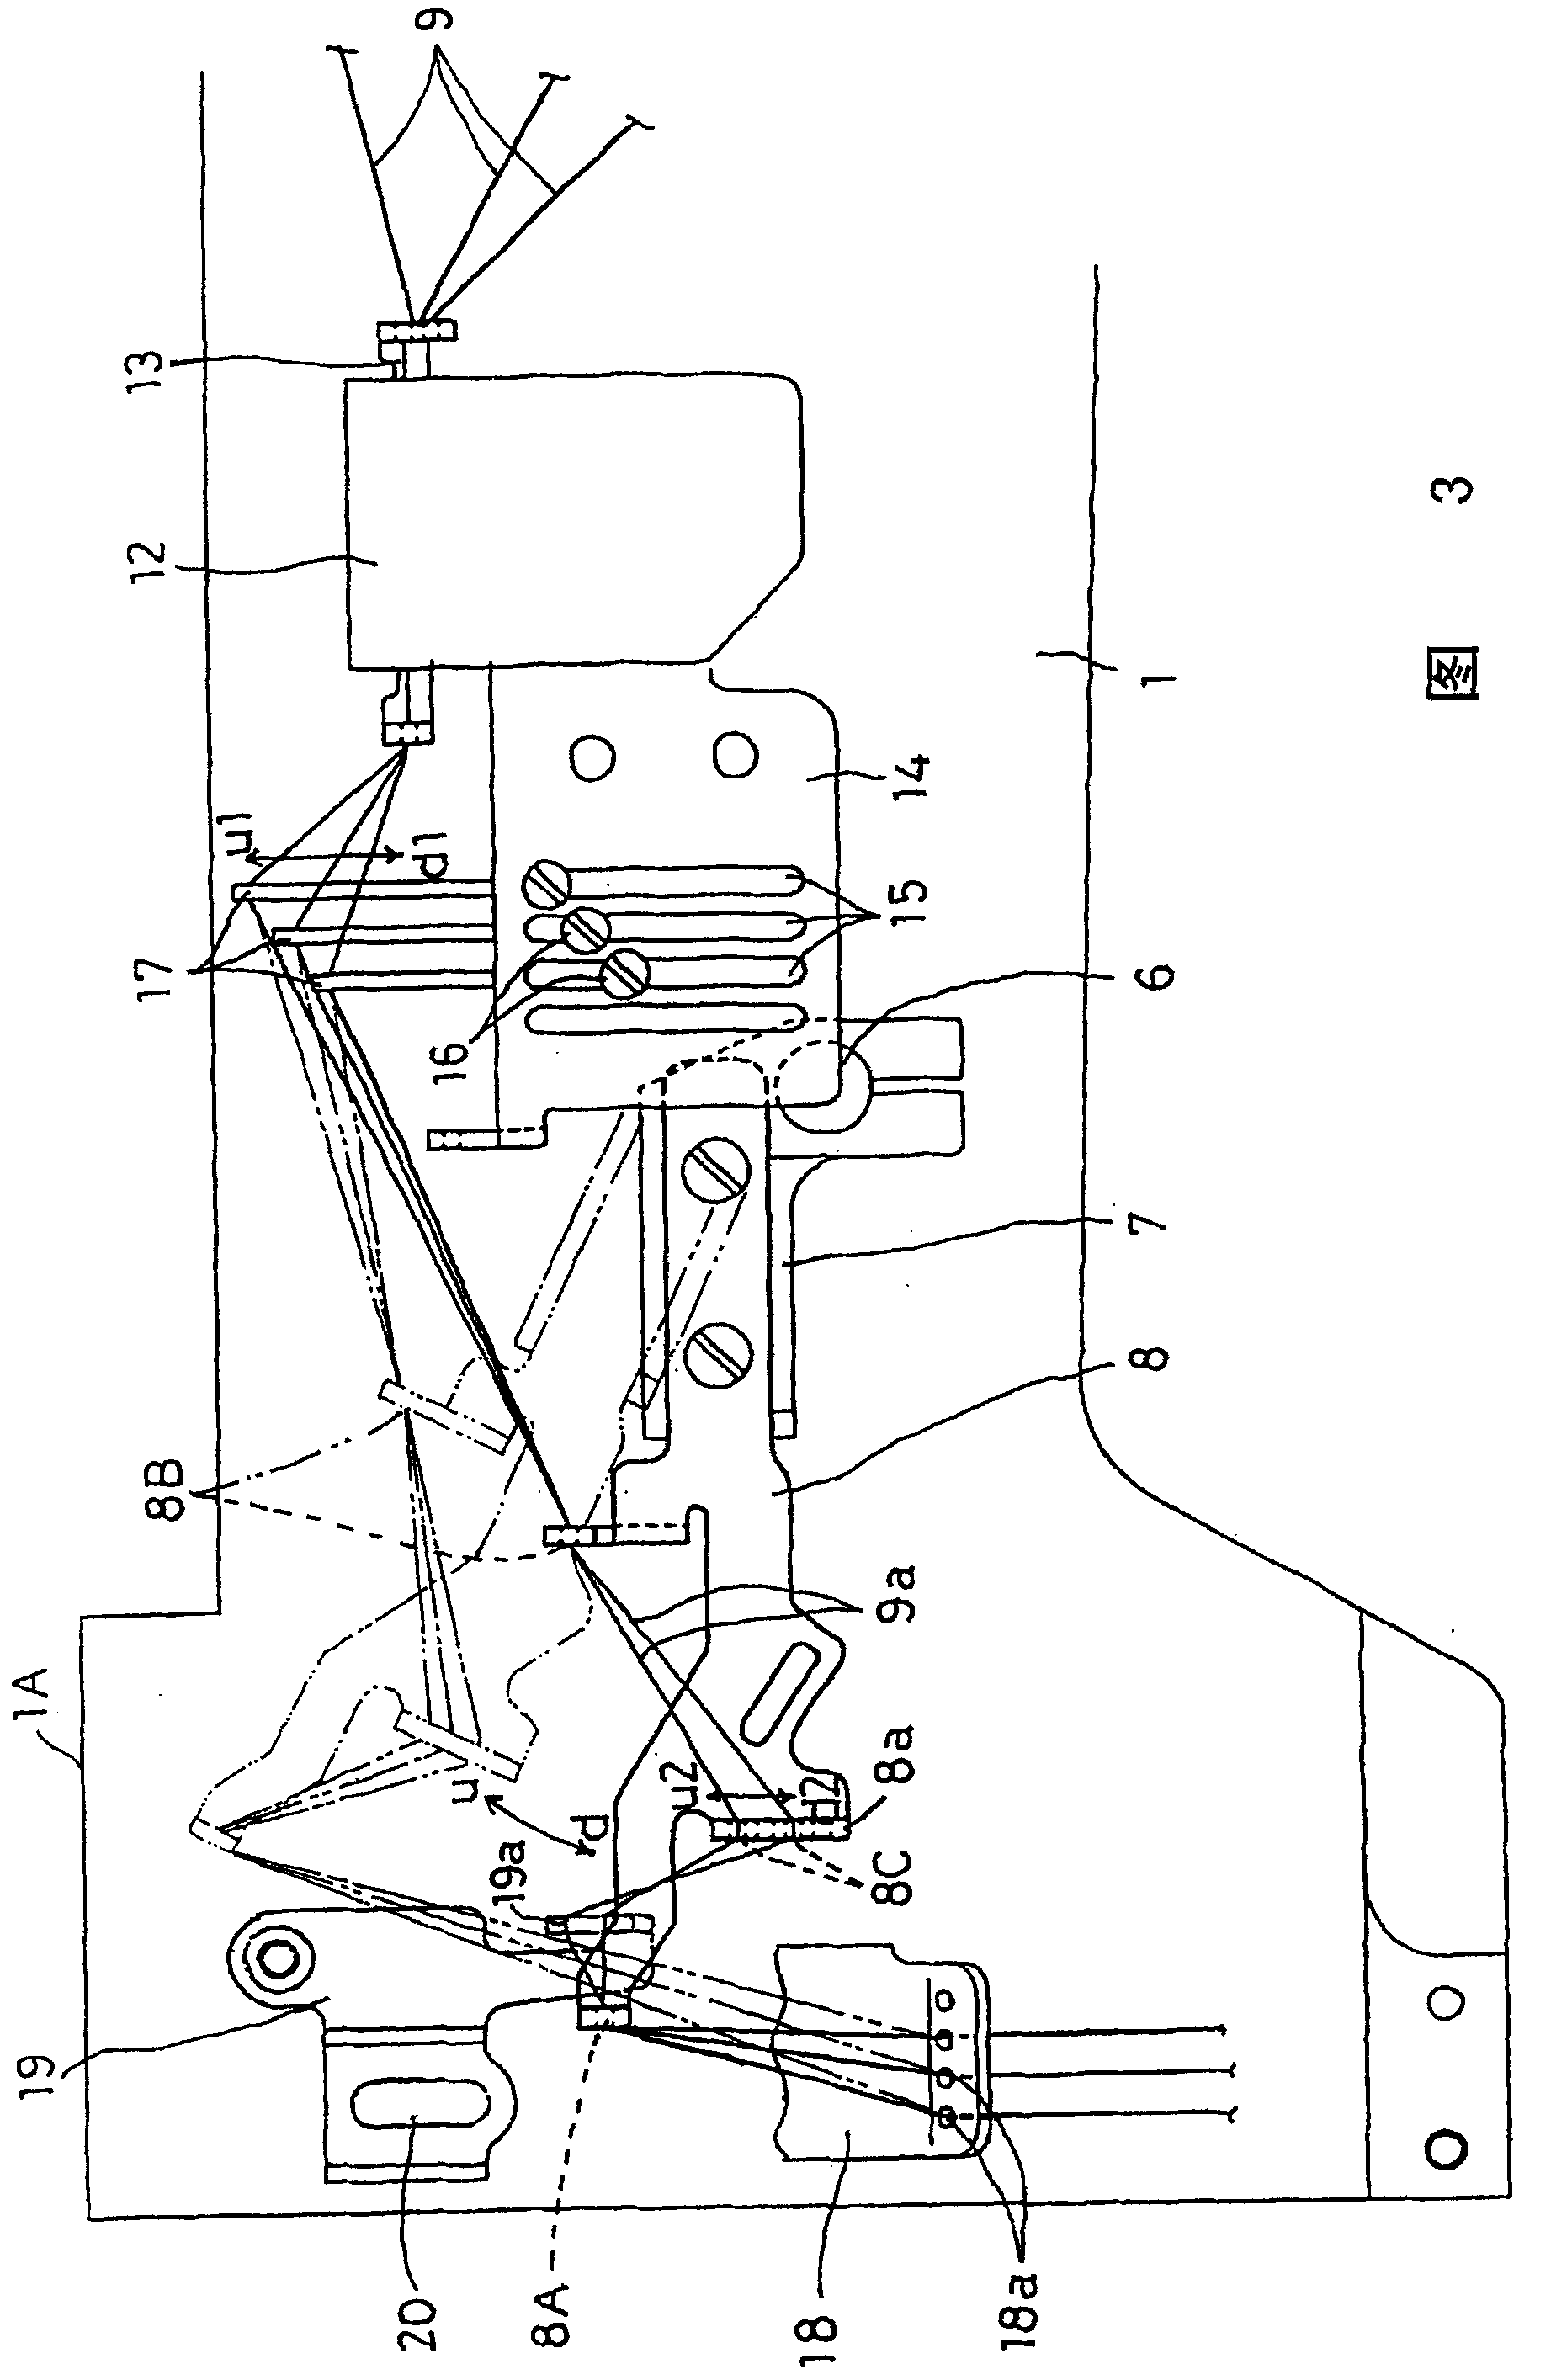 Needle thread feeding device of sewing machine